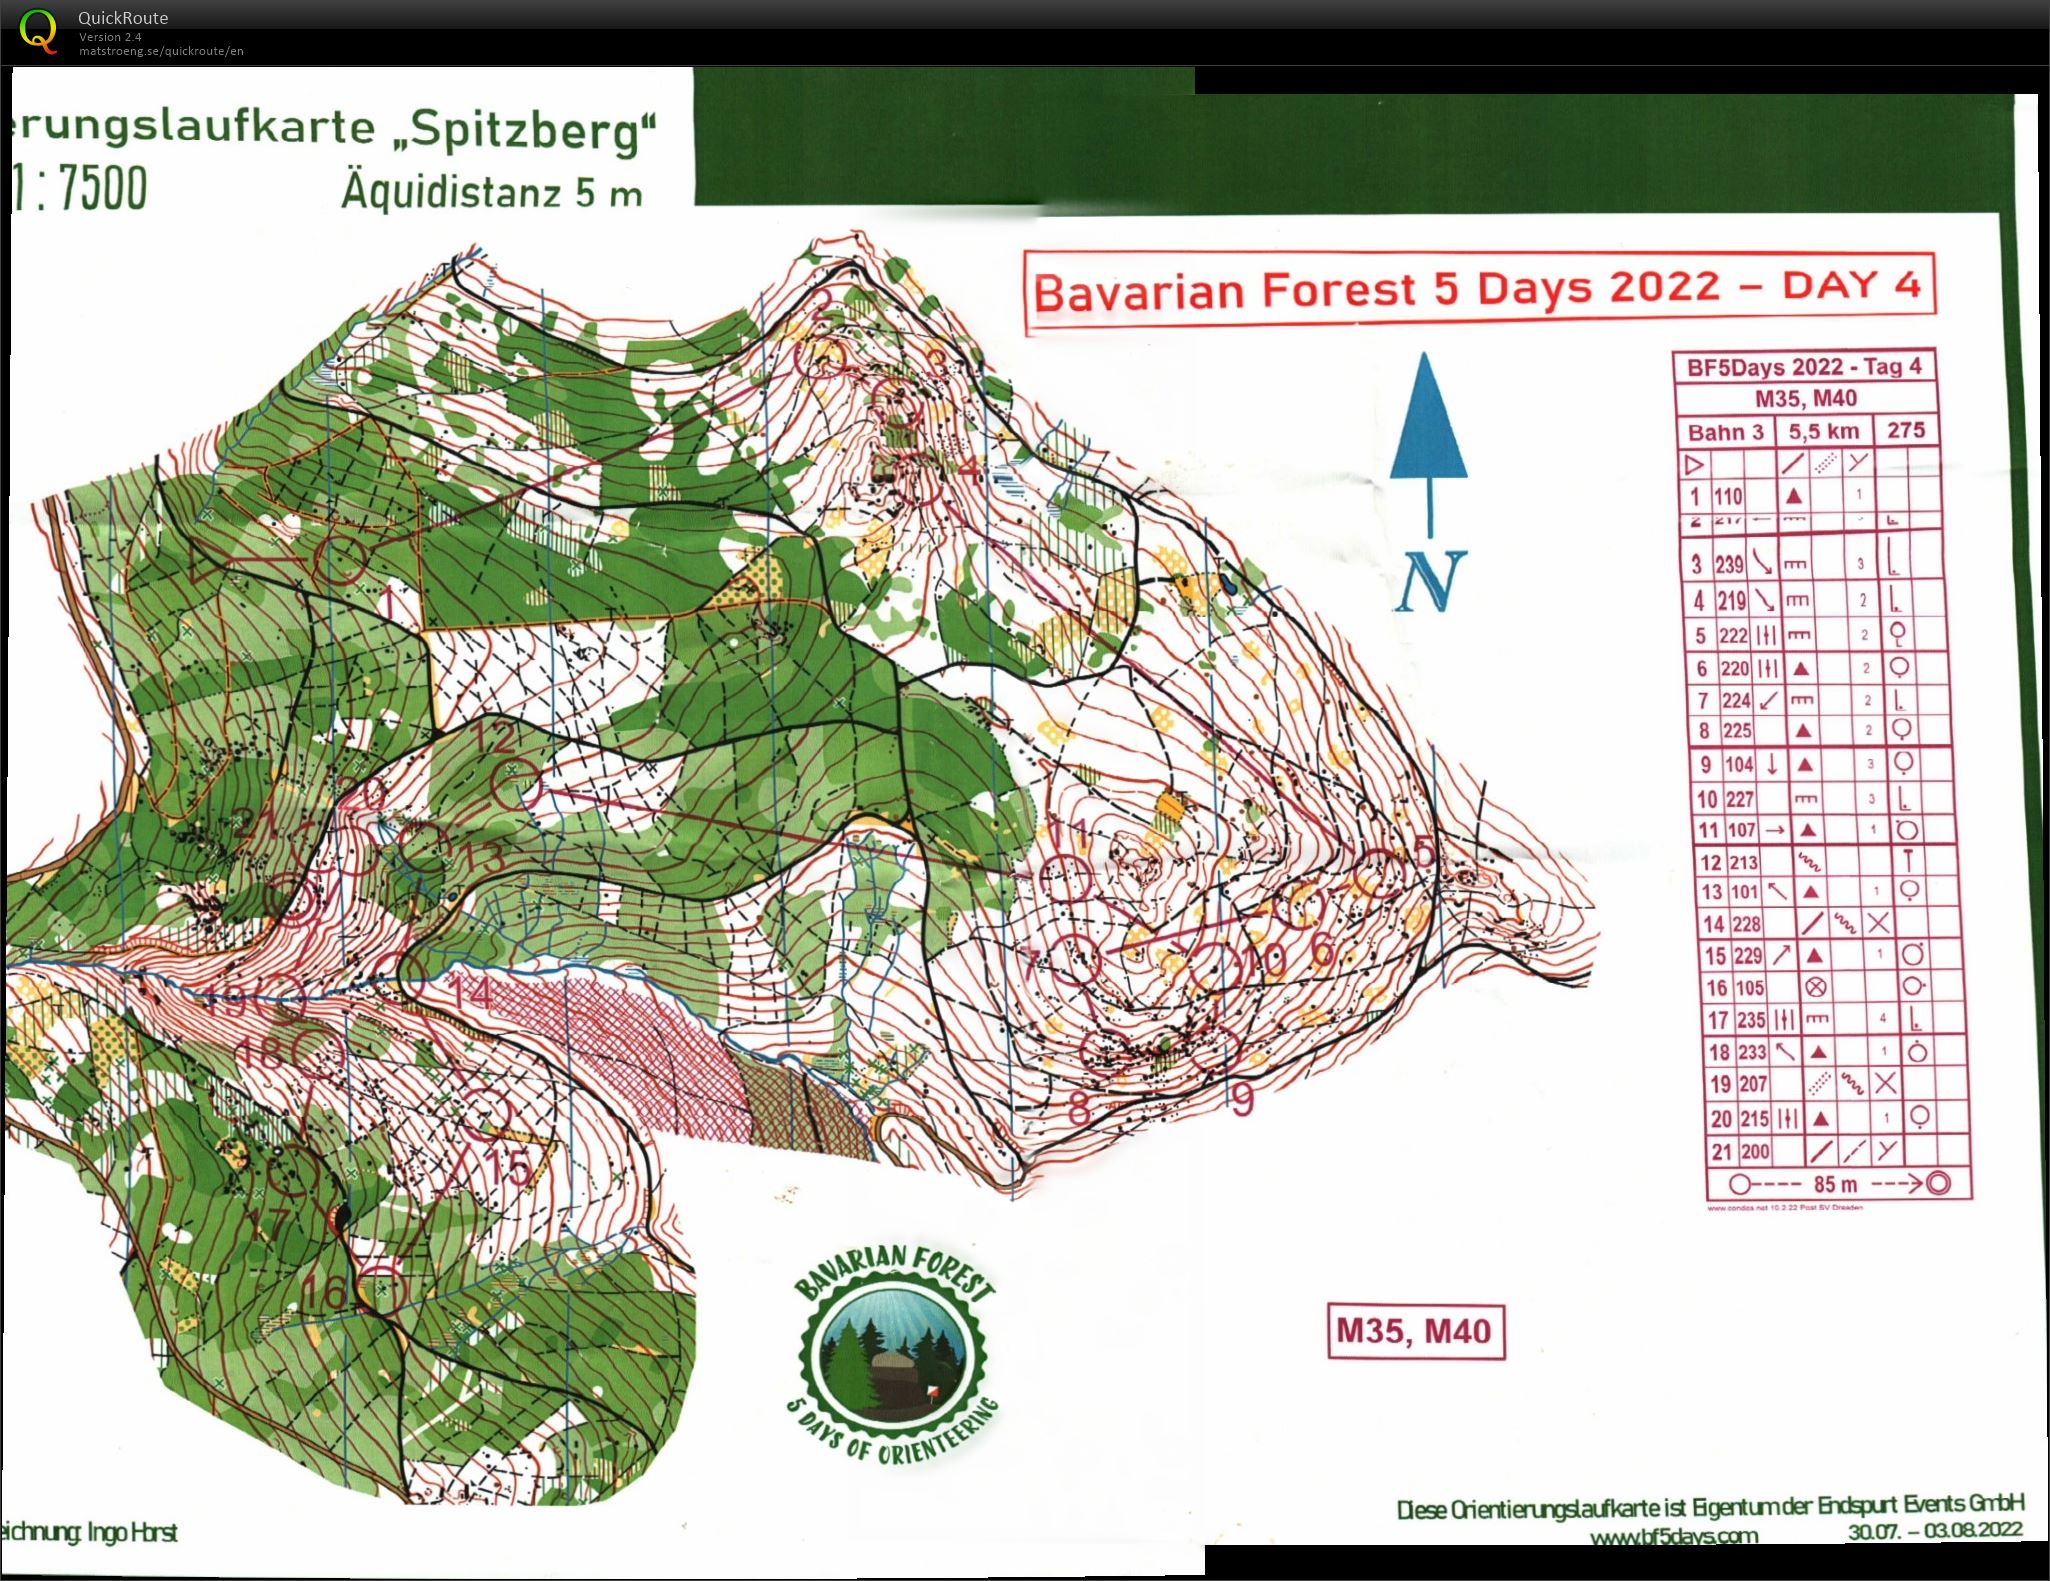 Bavarian Forest 5 Days - Day 4 (02/08/2022)